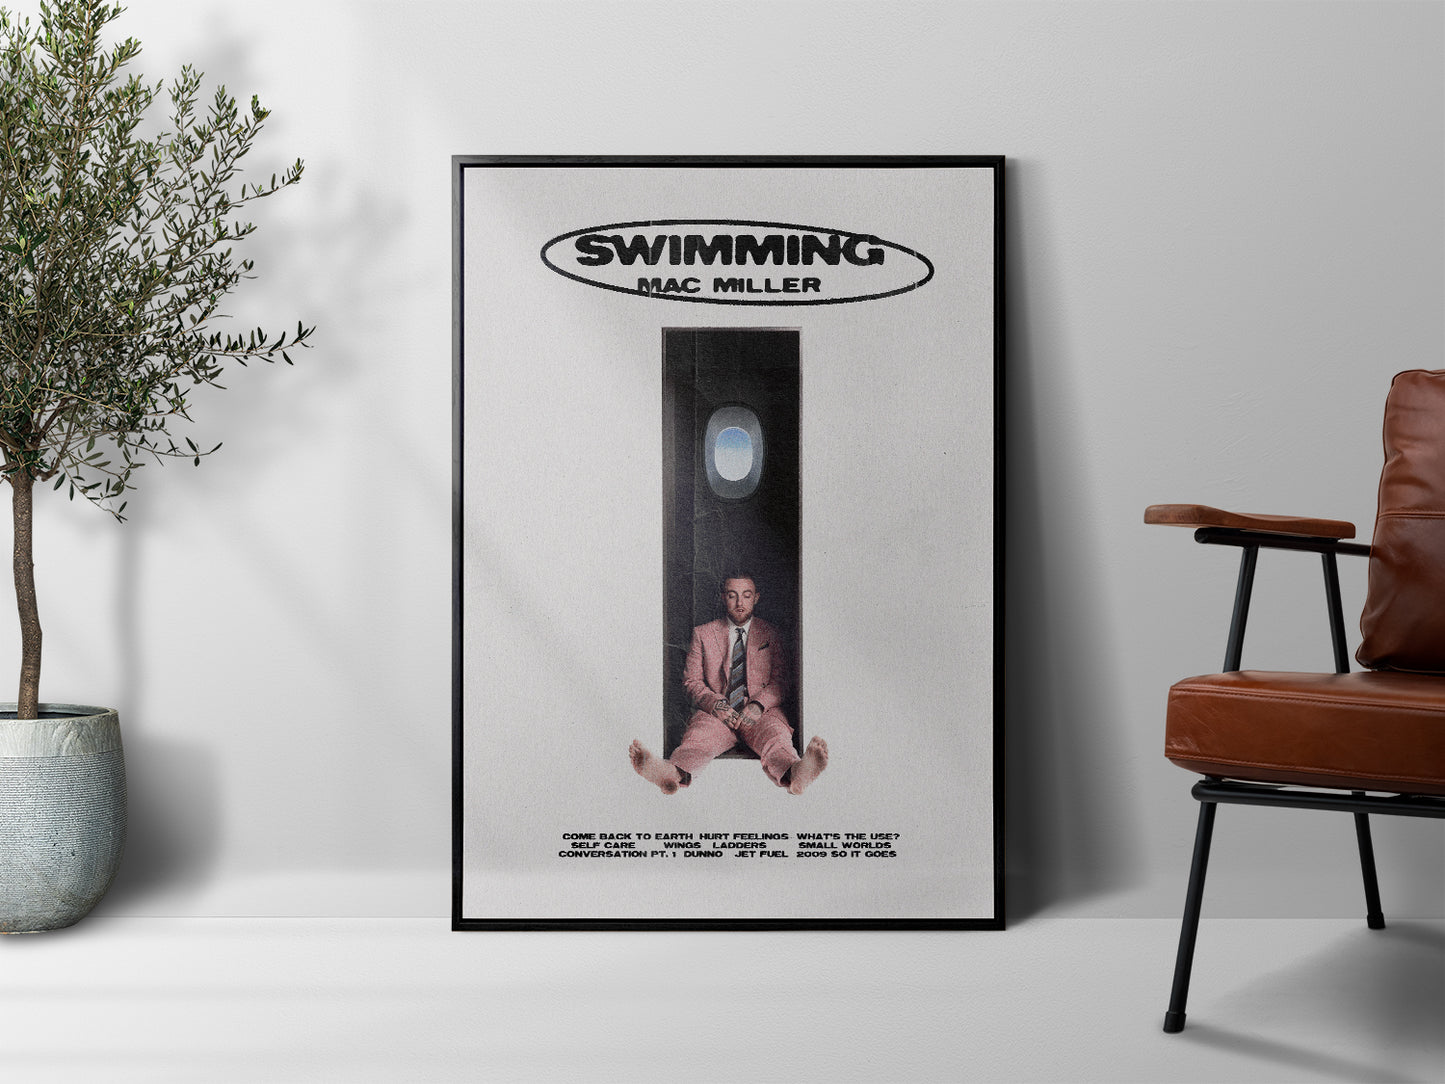 Mac Miller 'Swimming' Poster